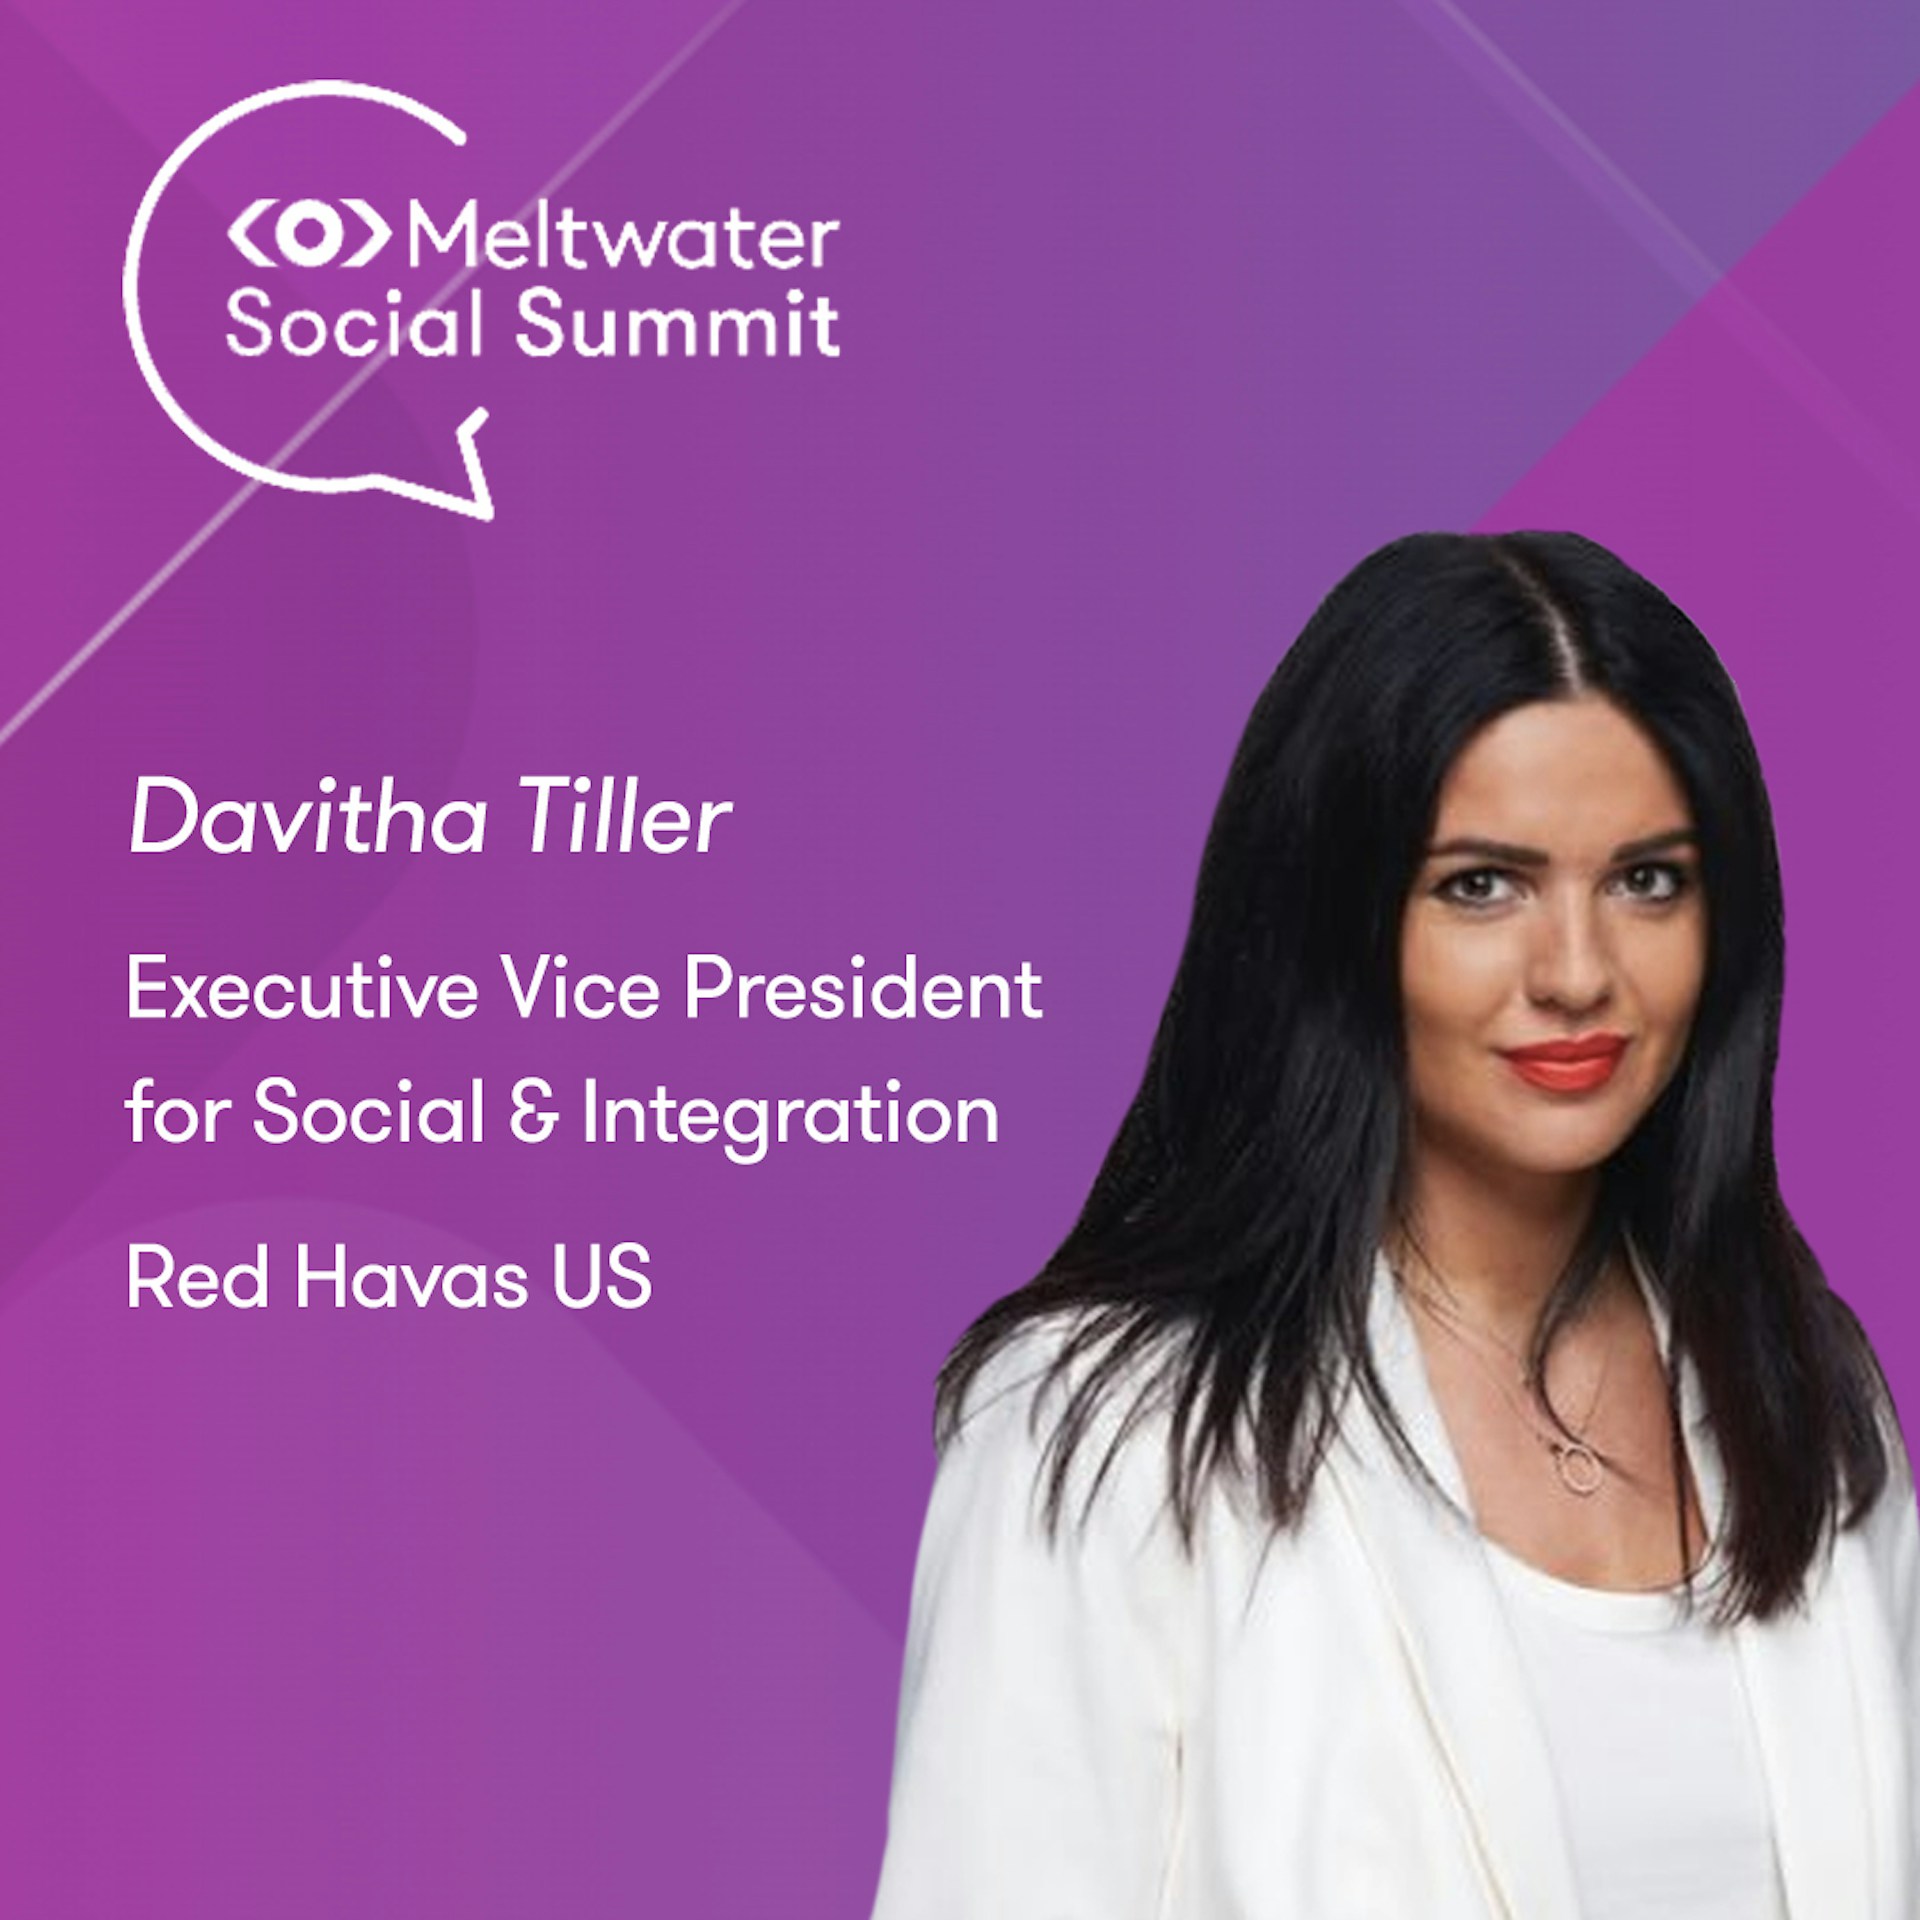 Meltwater Social Summit - Davitha Tiller, Red Havas US